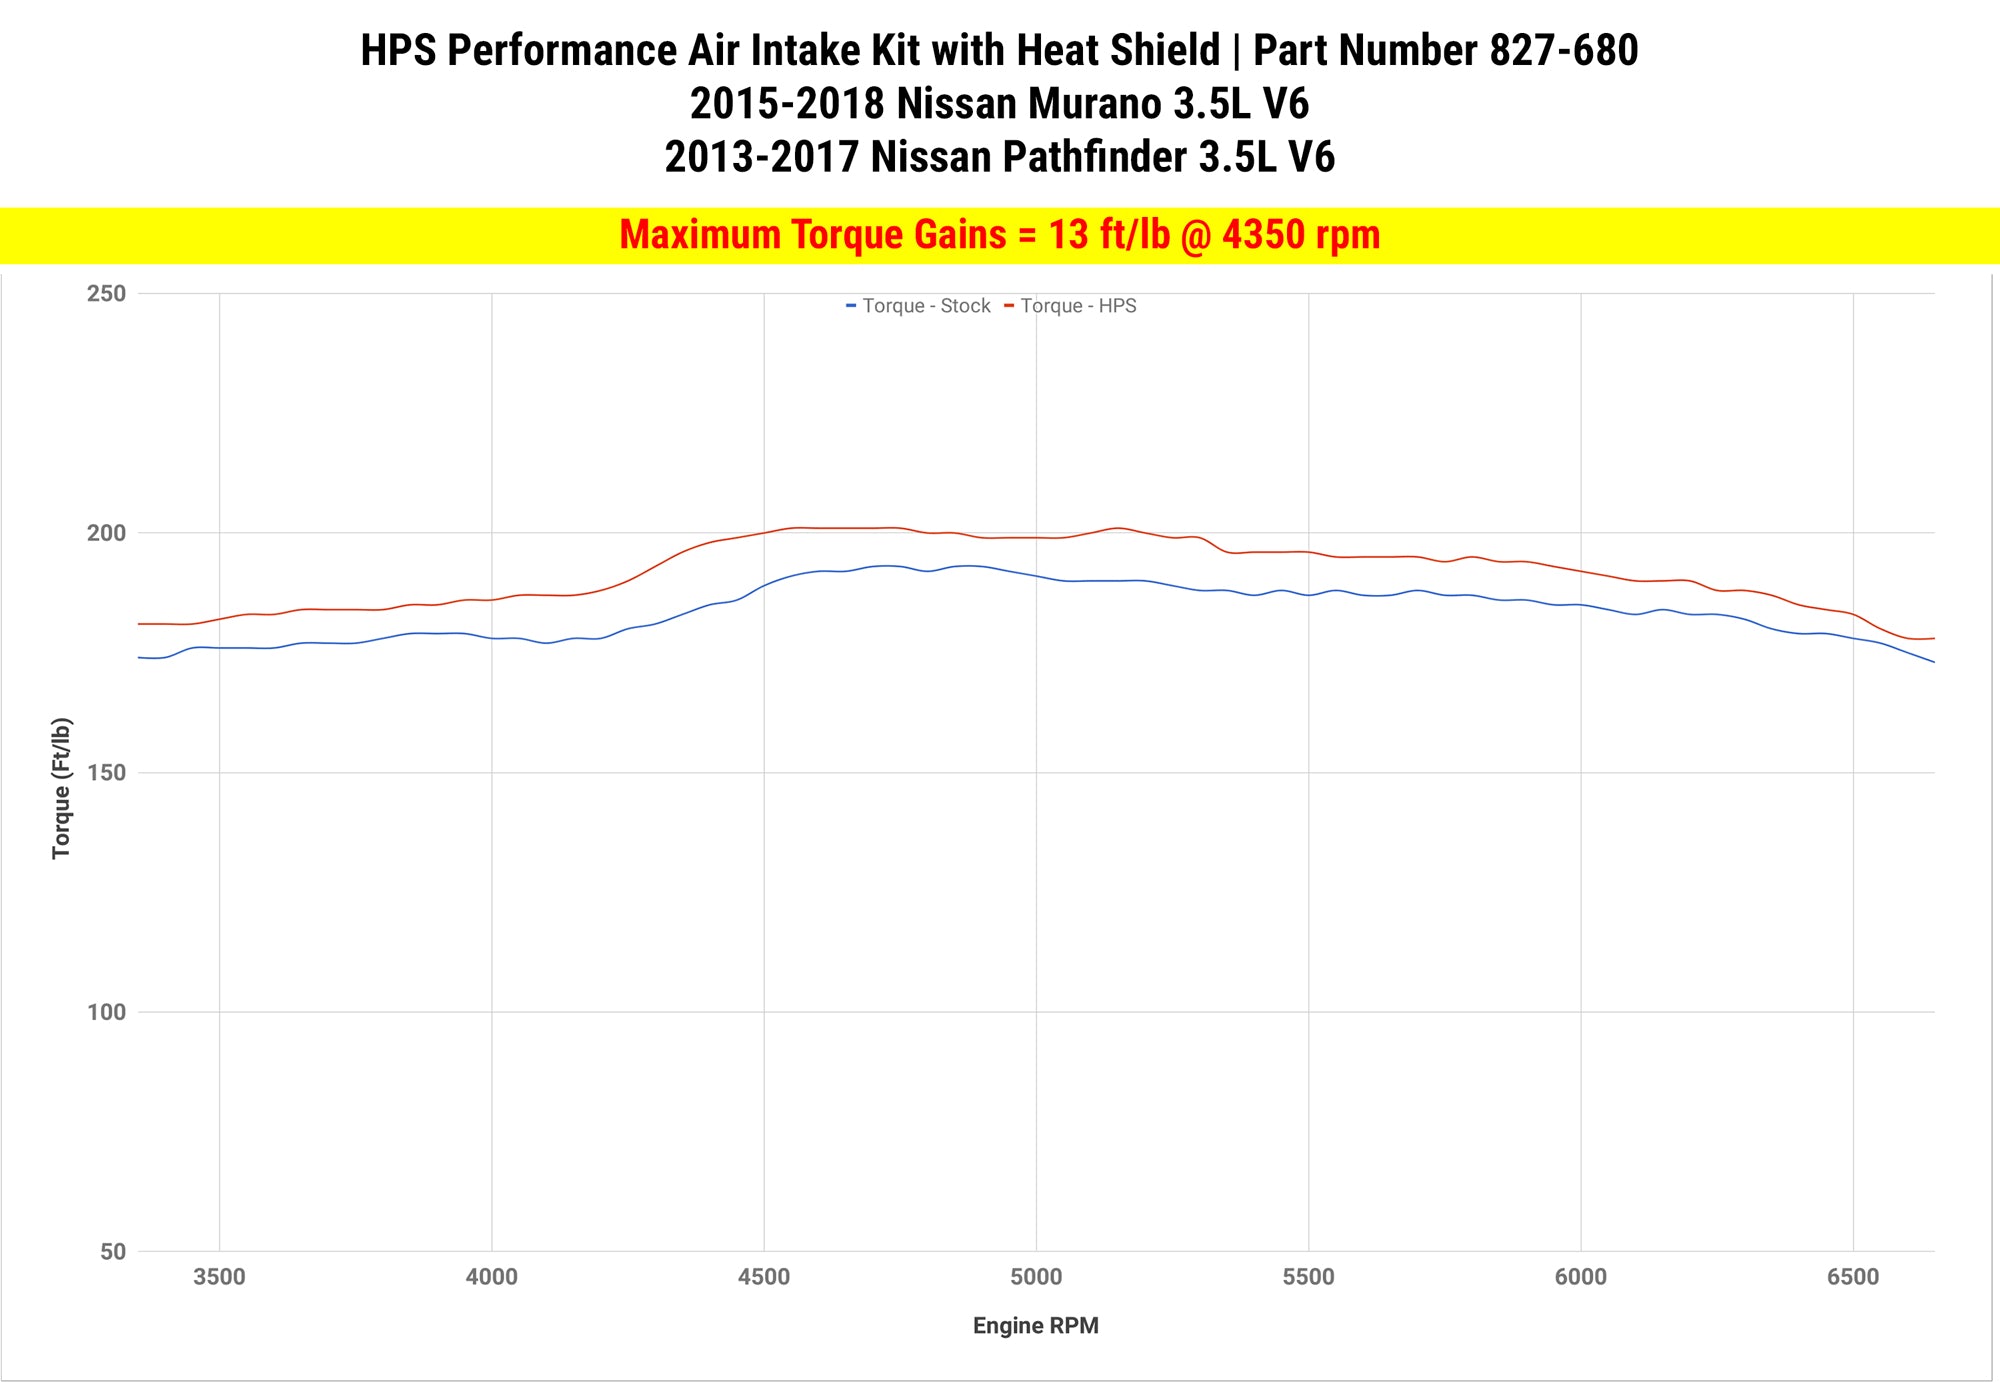 Dyno proven gains 13 ft/lb HPS Performance Shortram Air Intake Kit 2015-2018 Nissan Murano 3.5L V6 827-680P